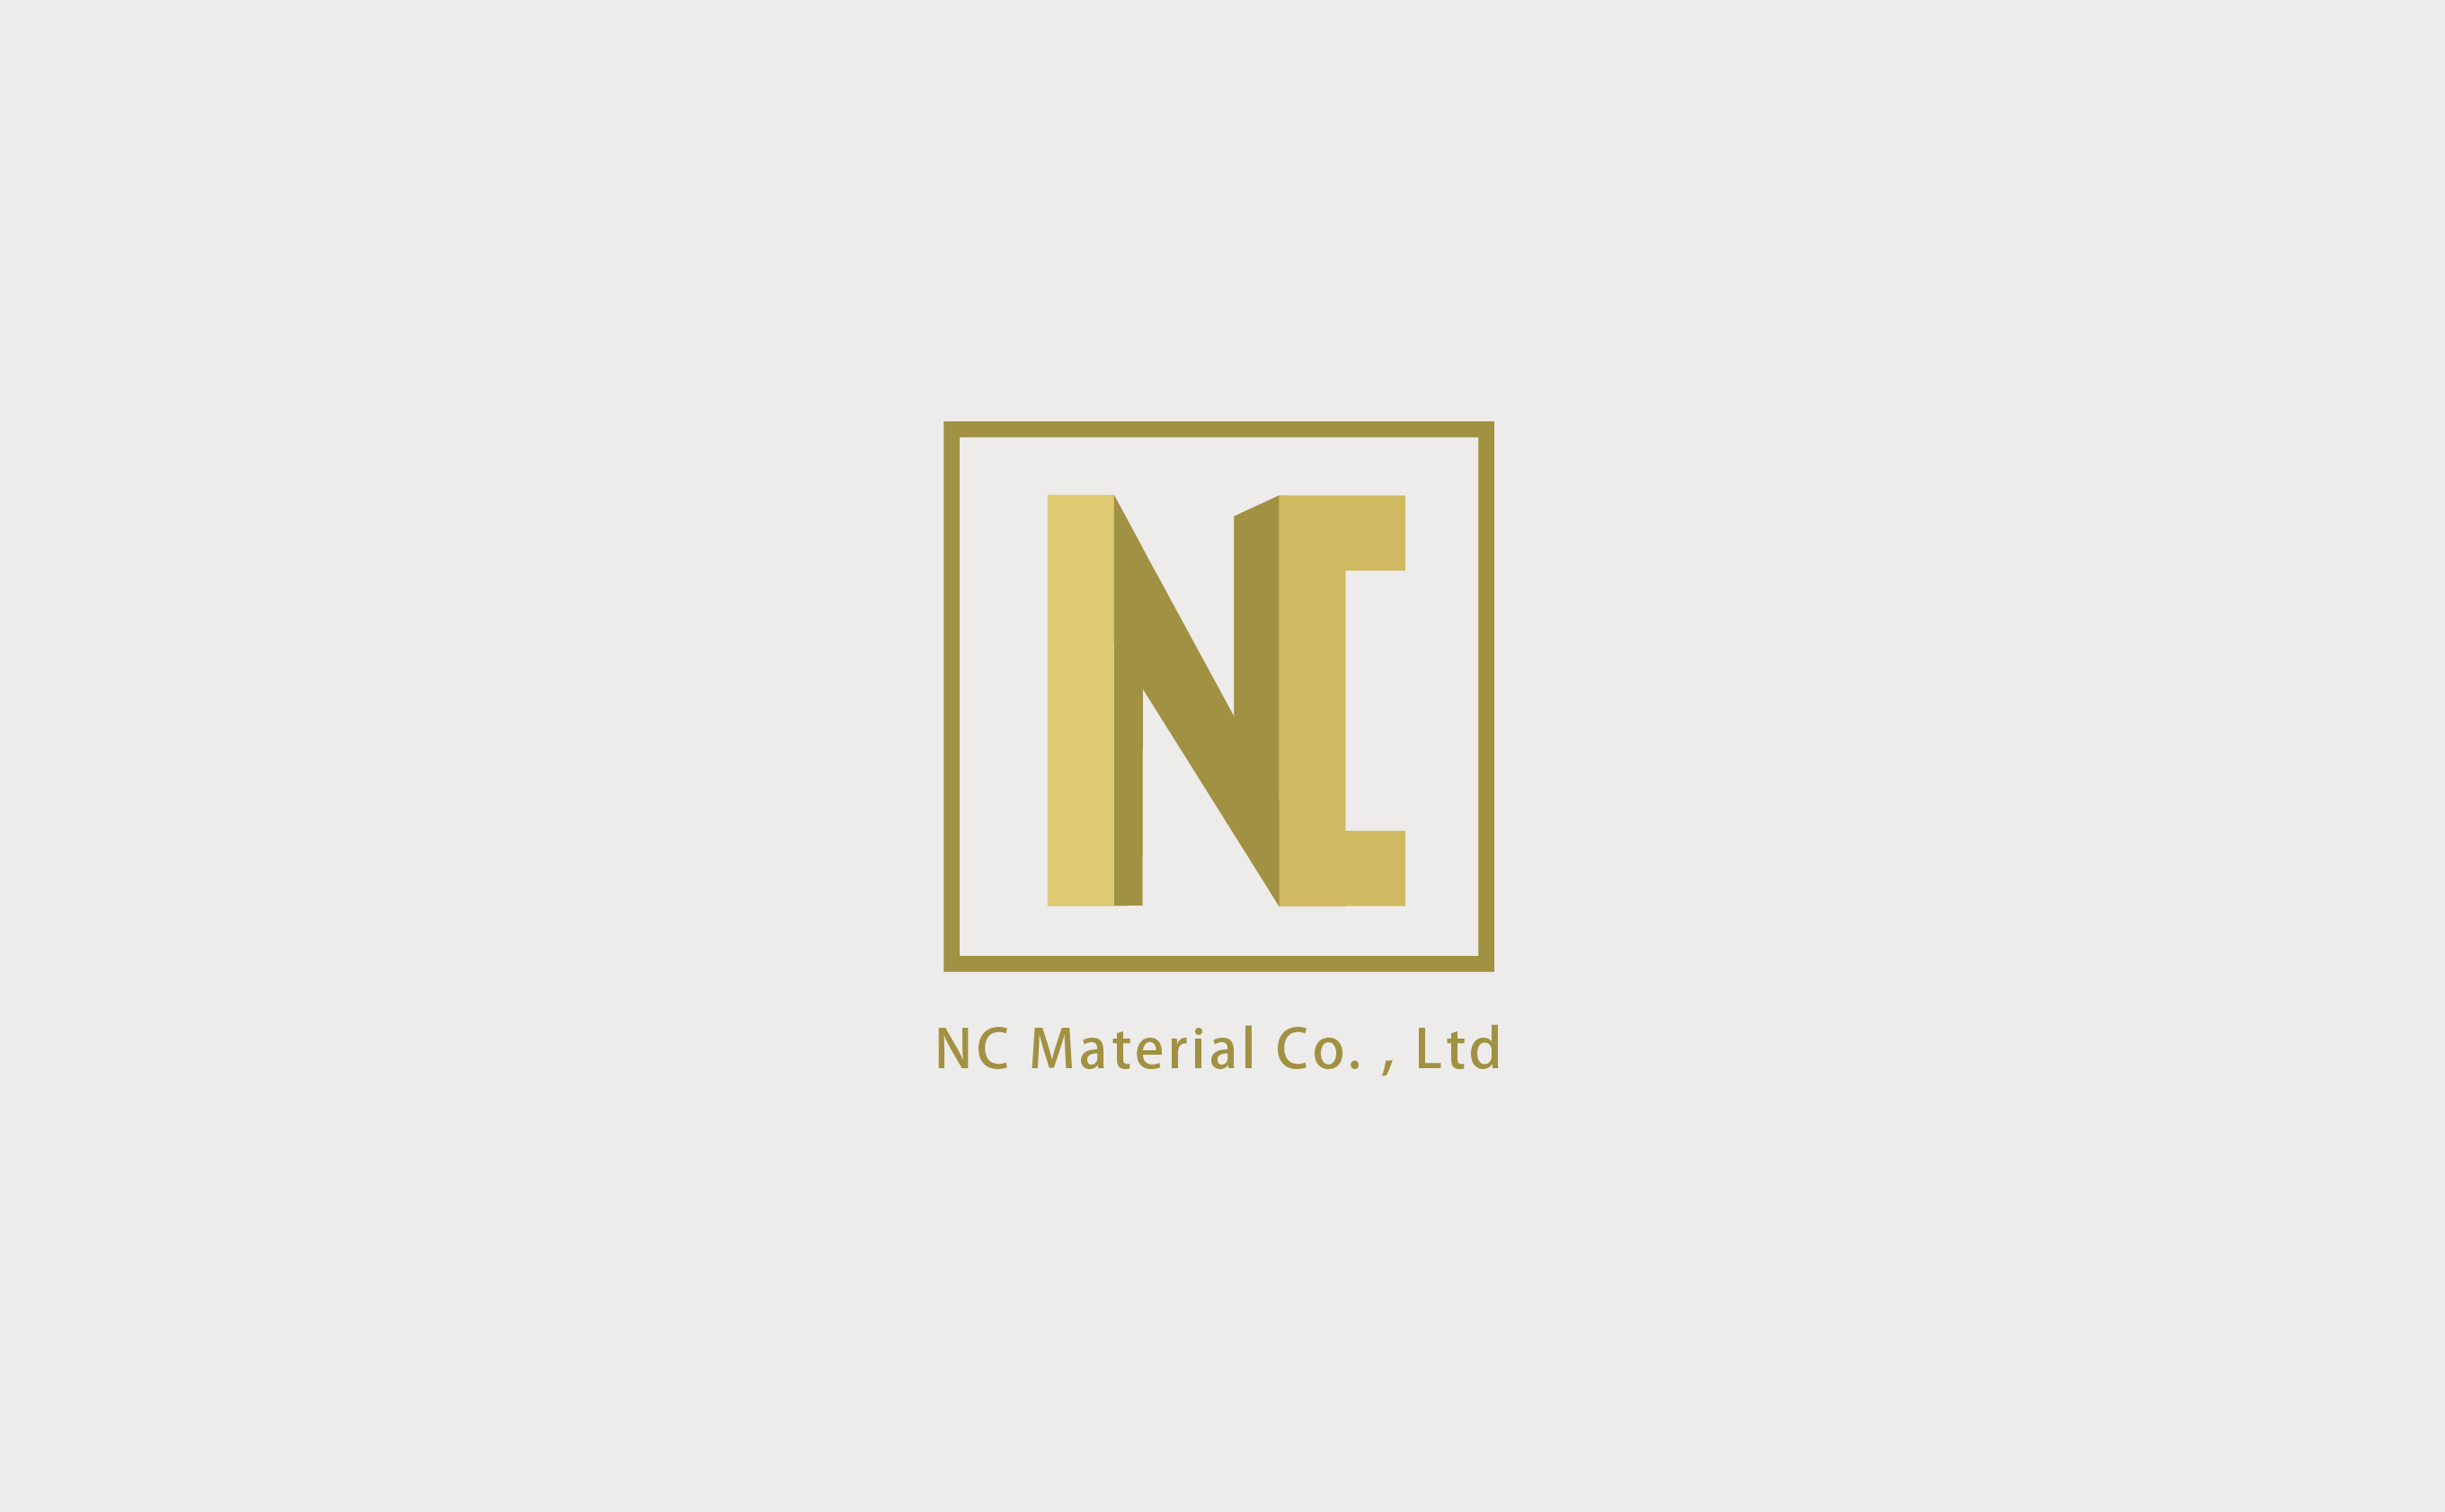 NC MATERIAL CO., LTD.